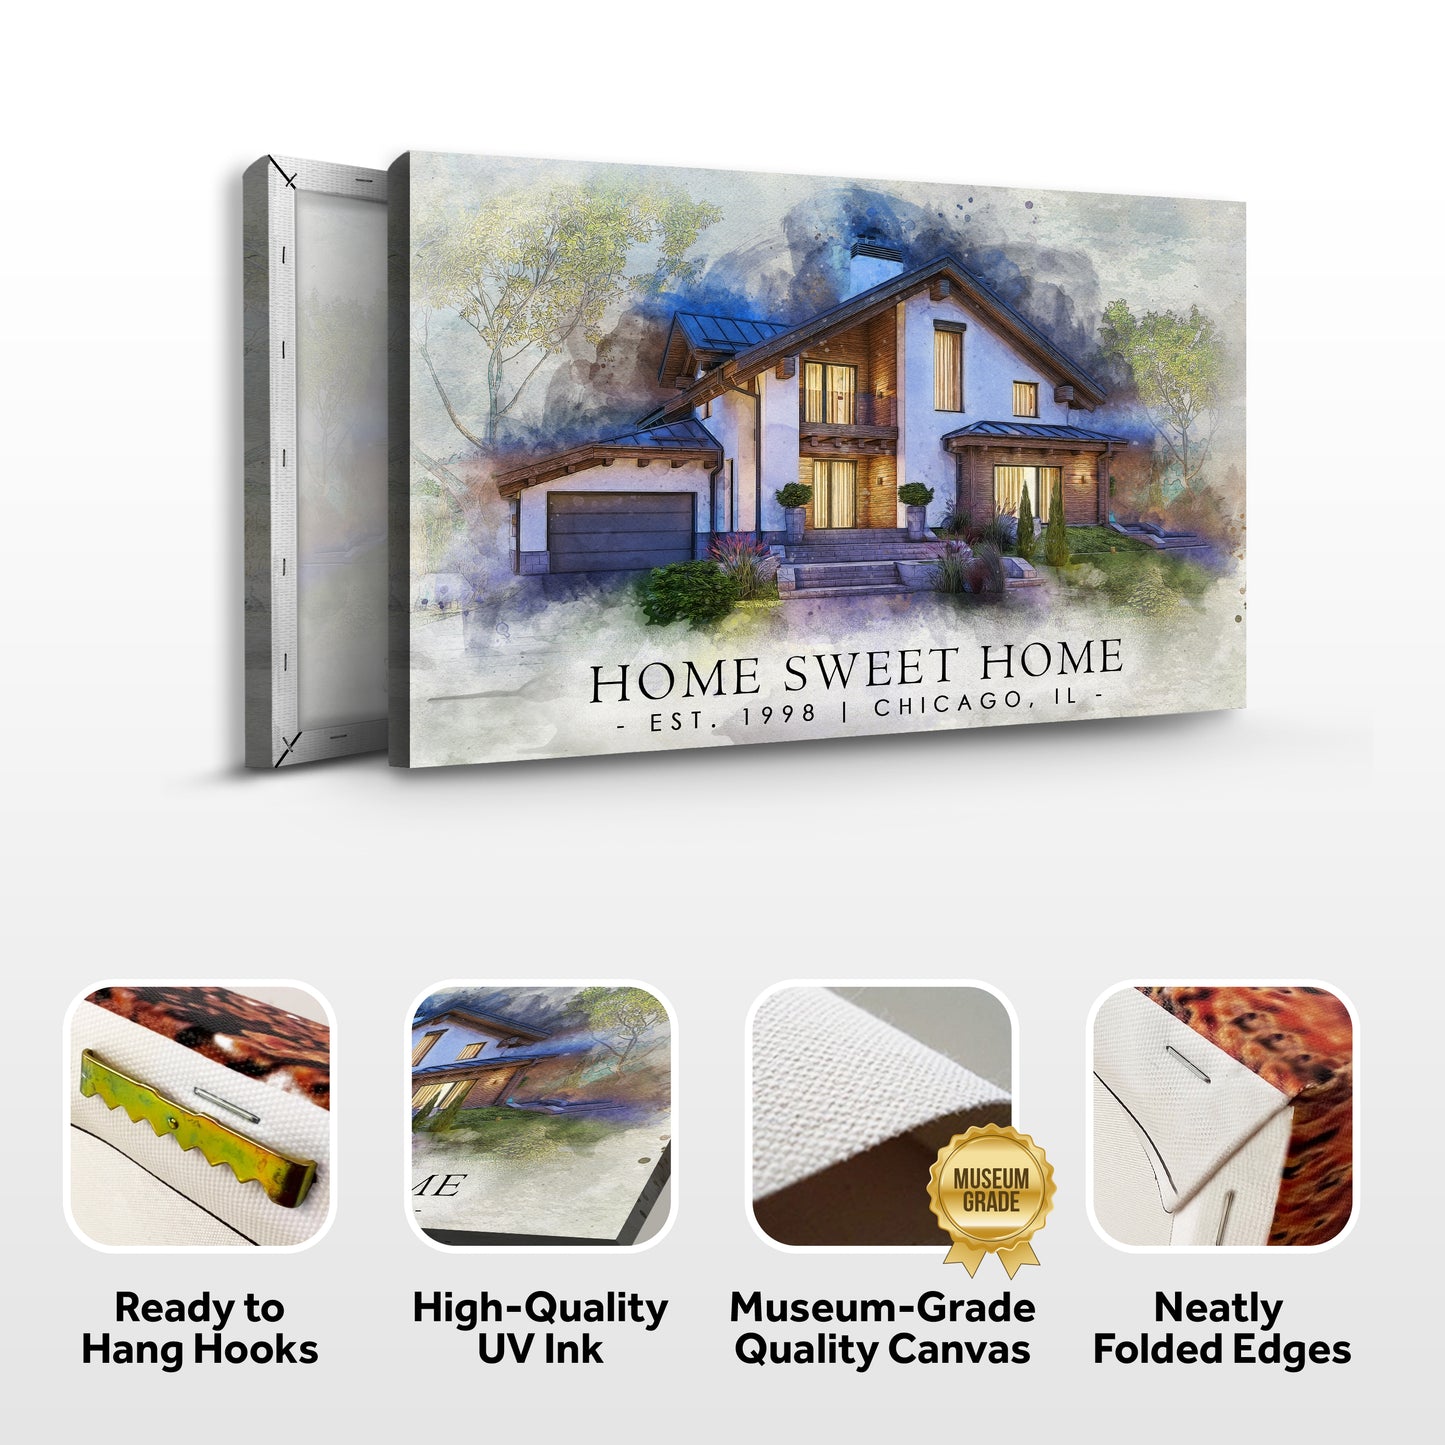 Home Sweet Home Watercolor Sign II